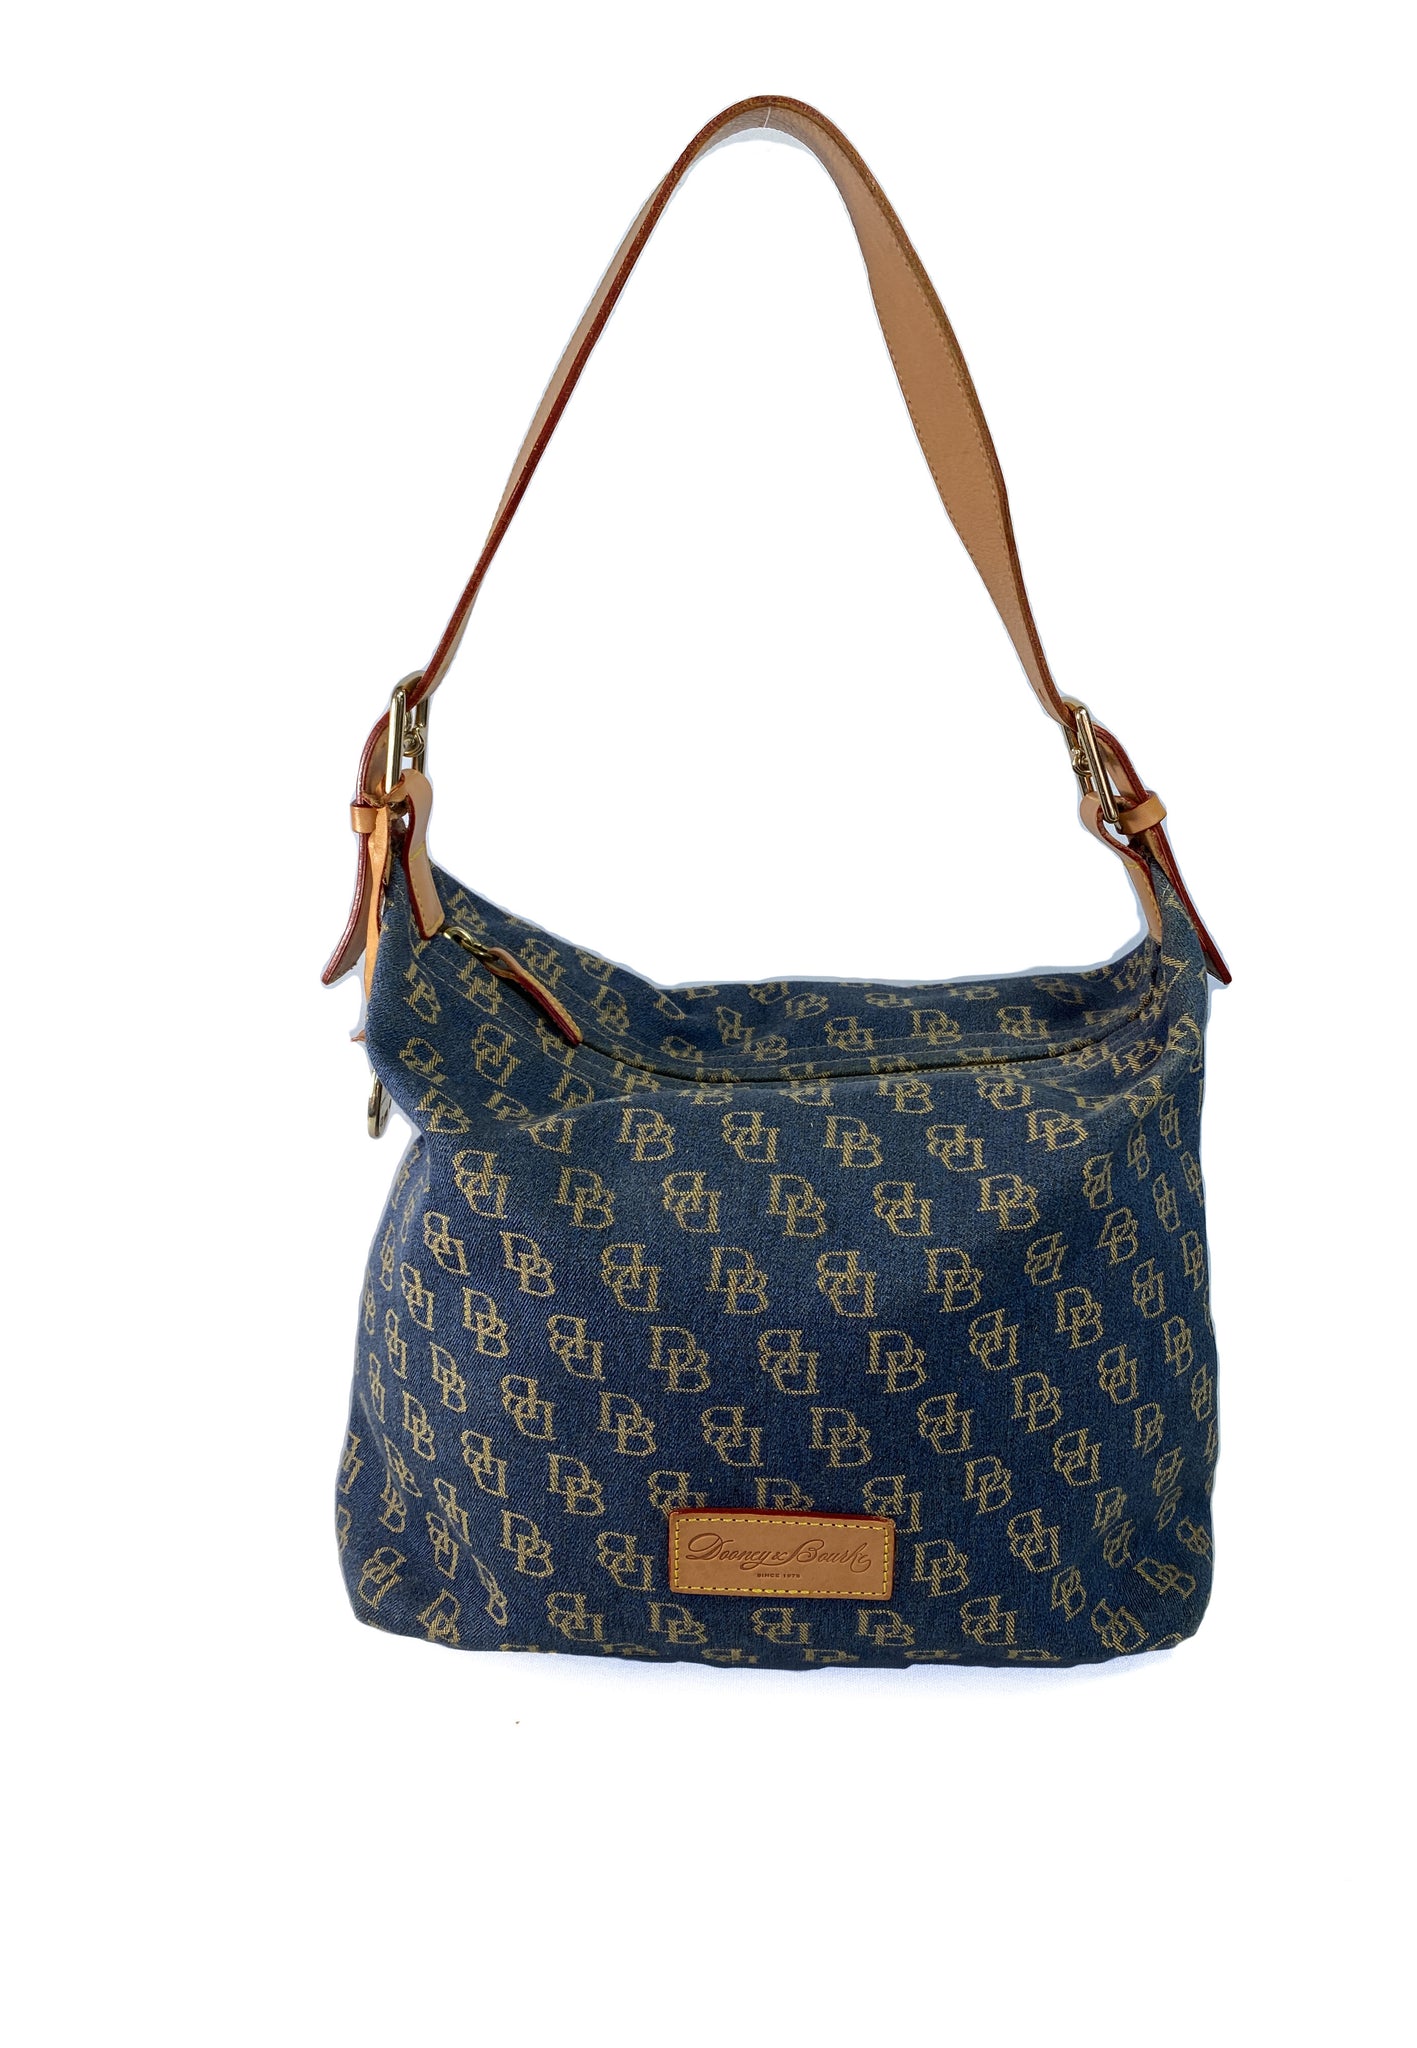 Louis Vuitton Blue Denim Handbag Red Leather Straps